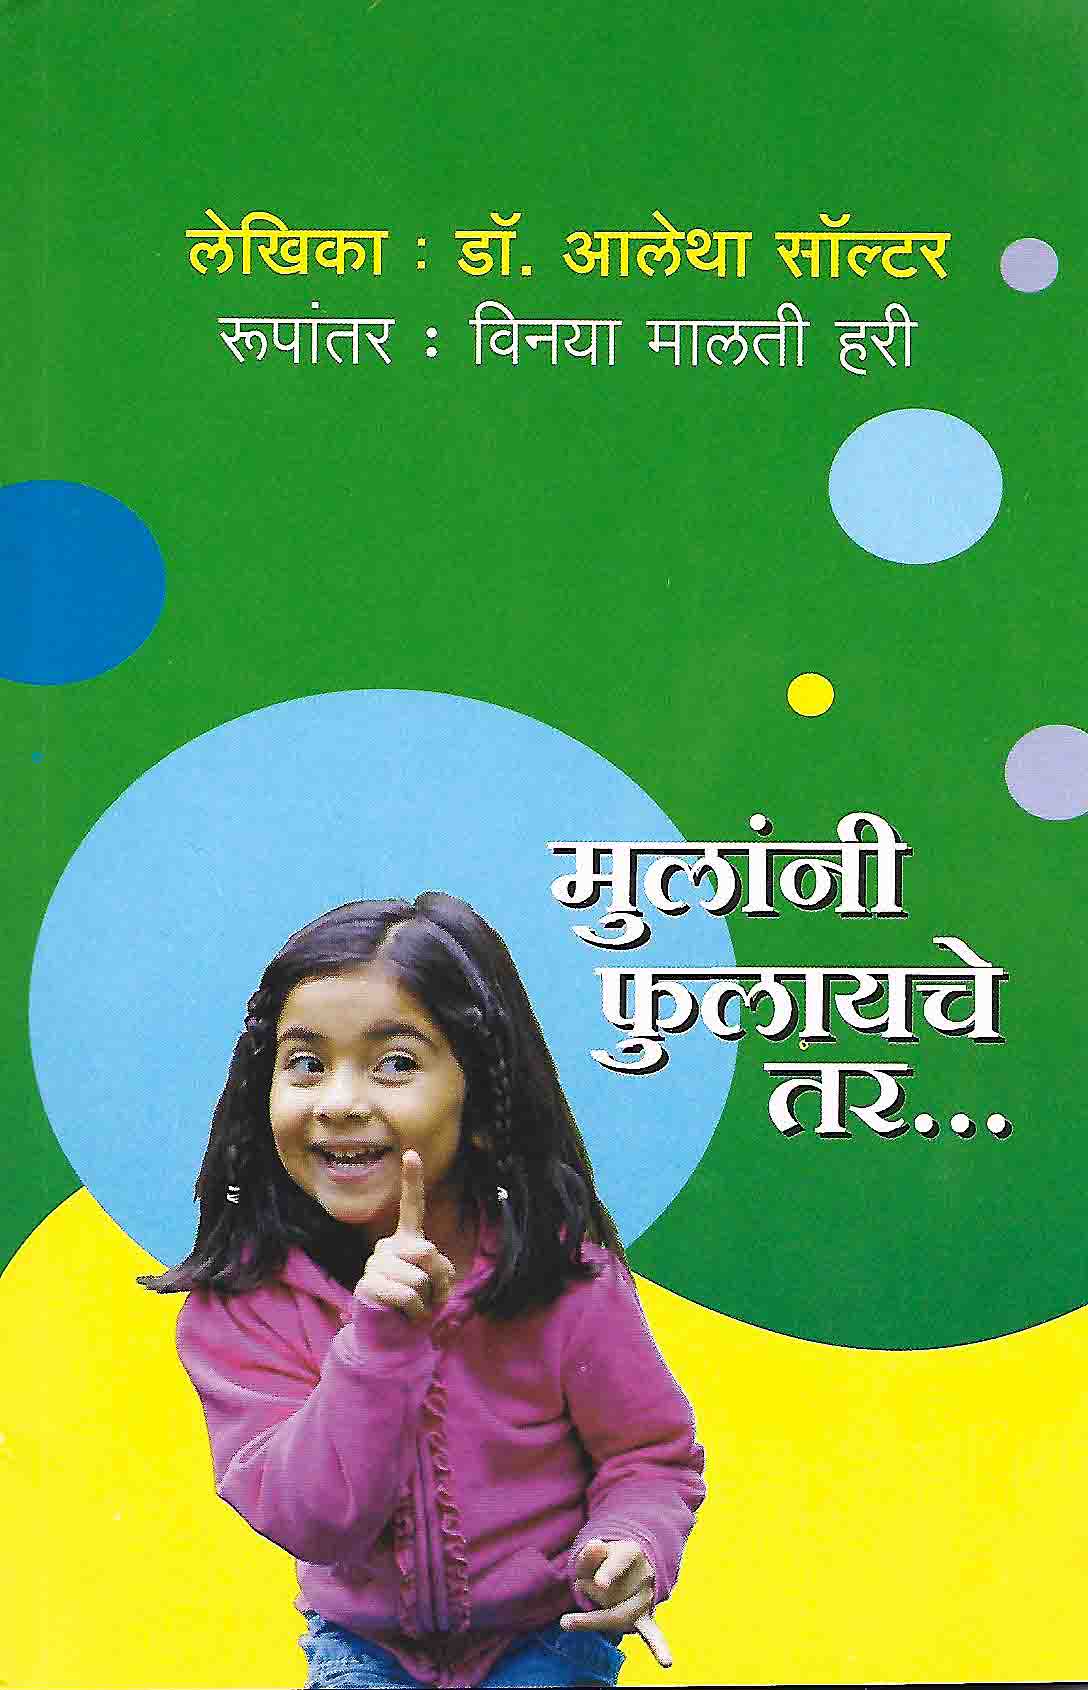 Helping Young Children Flourish is Marathi